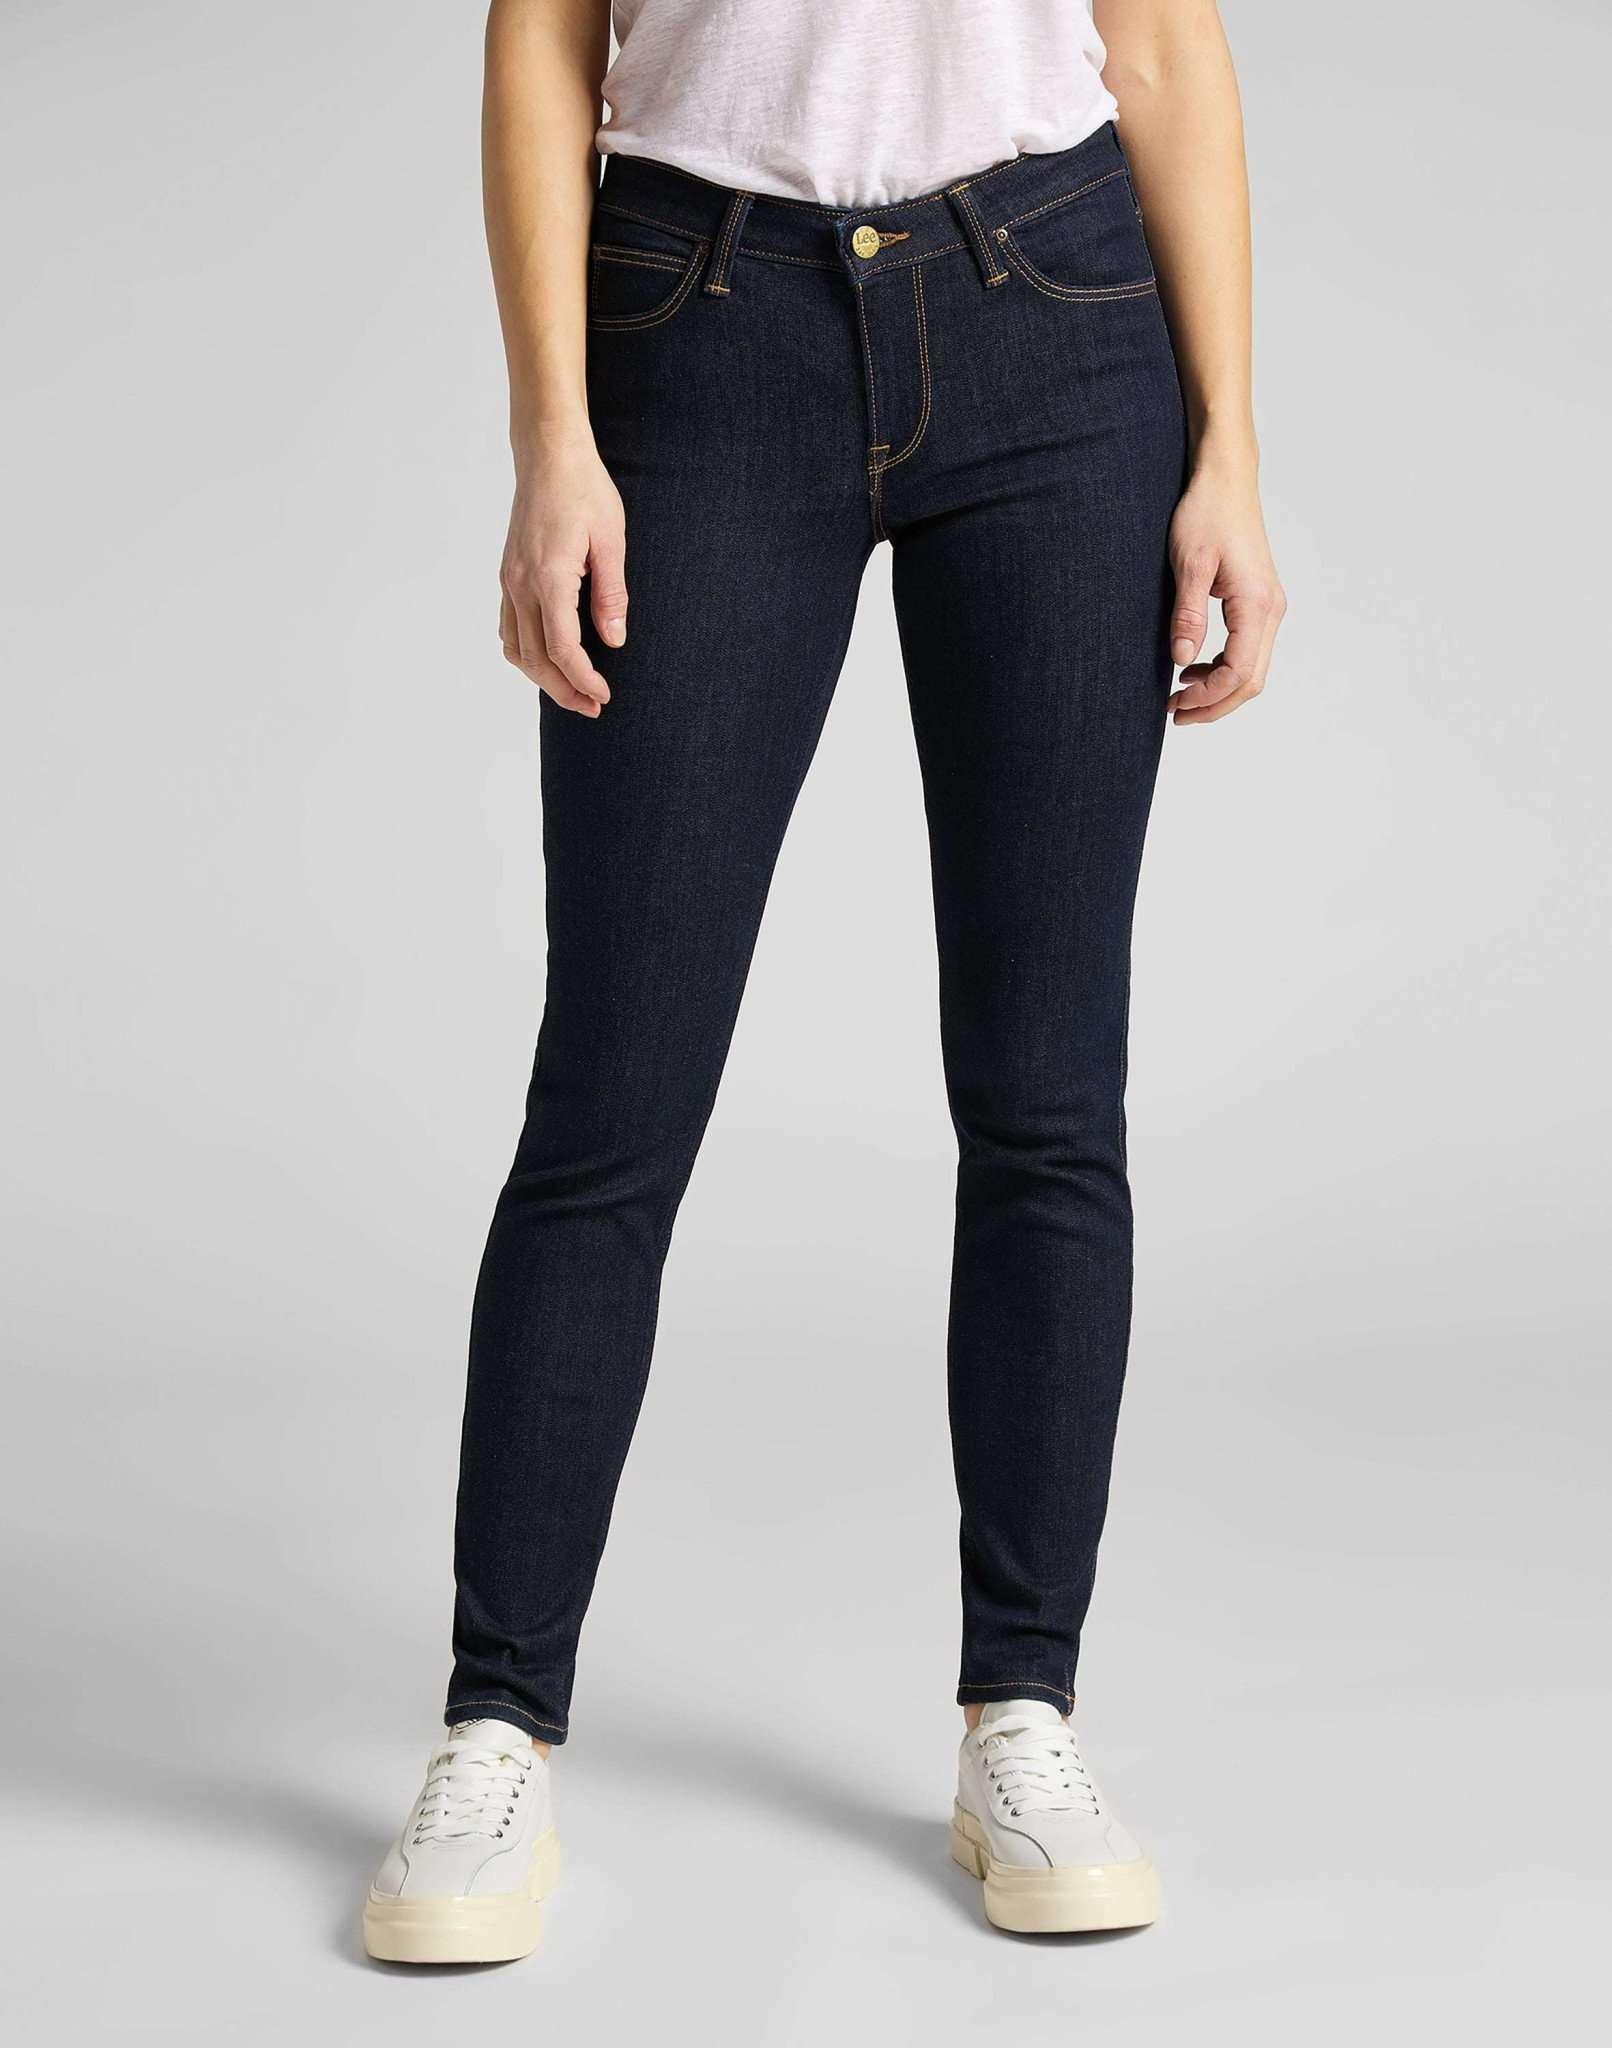 Jeans Skinny Fit Scarlett Damen Blau Denim L33/W27 von Lee